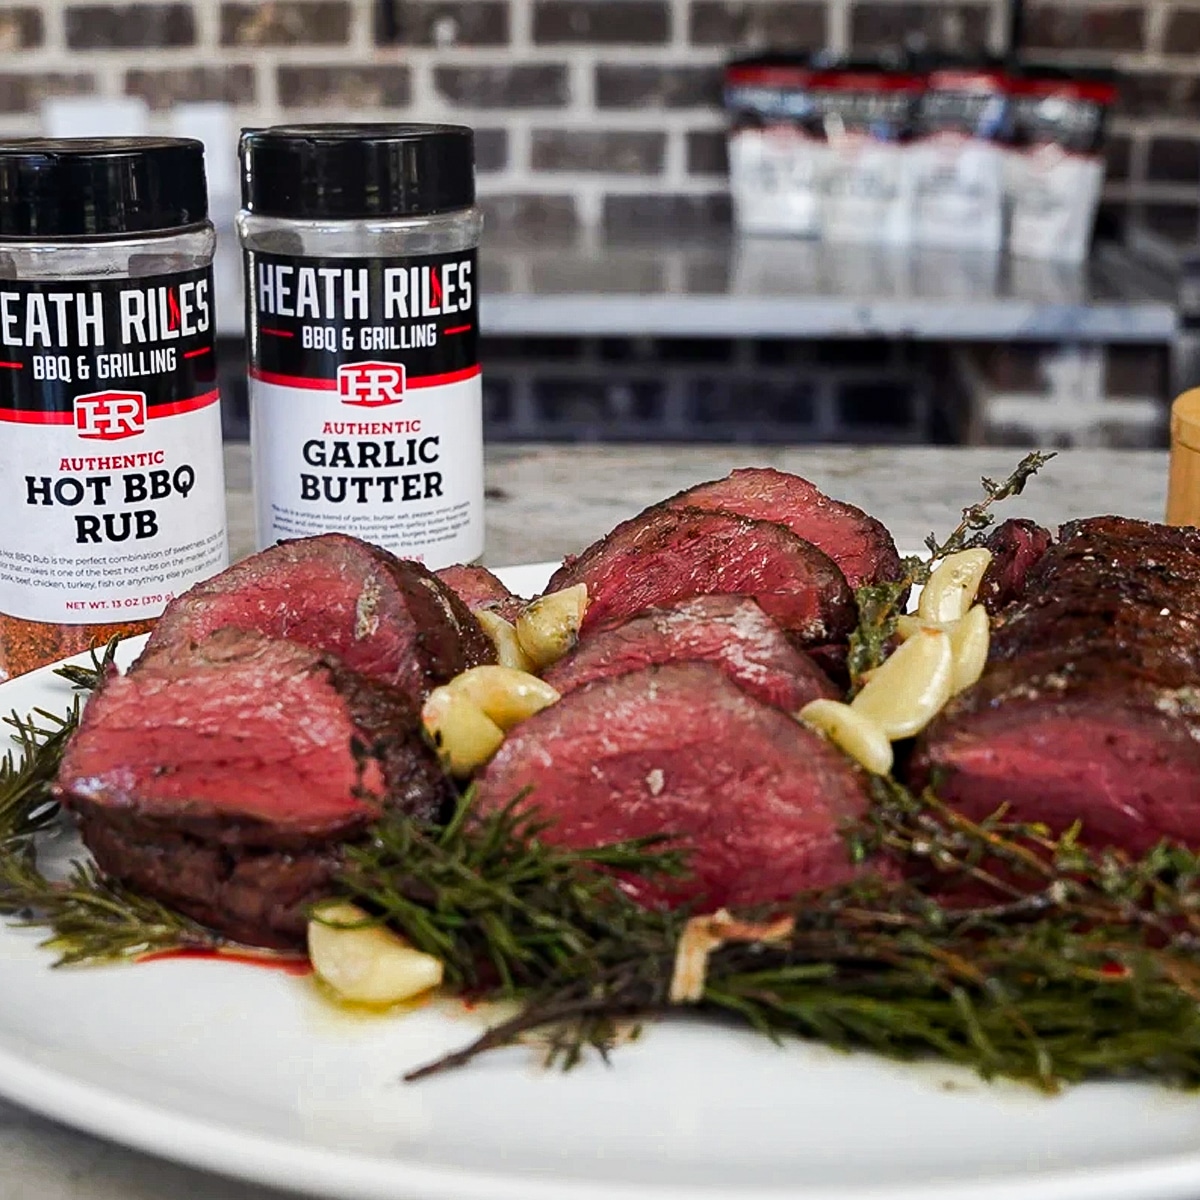 Heath Riles BBQ Ultimate Steak Gift Pack